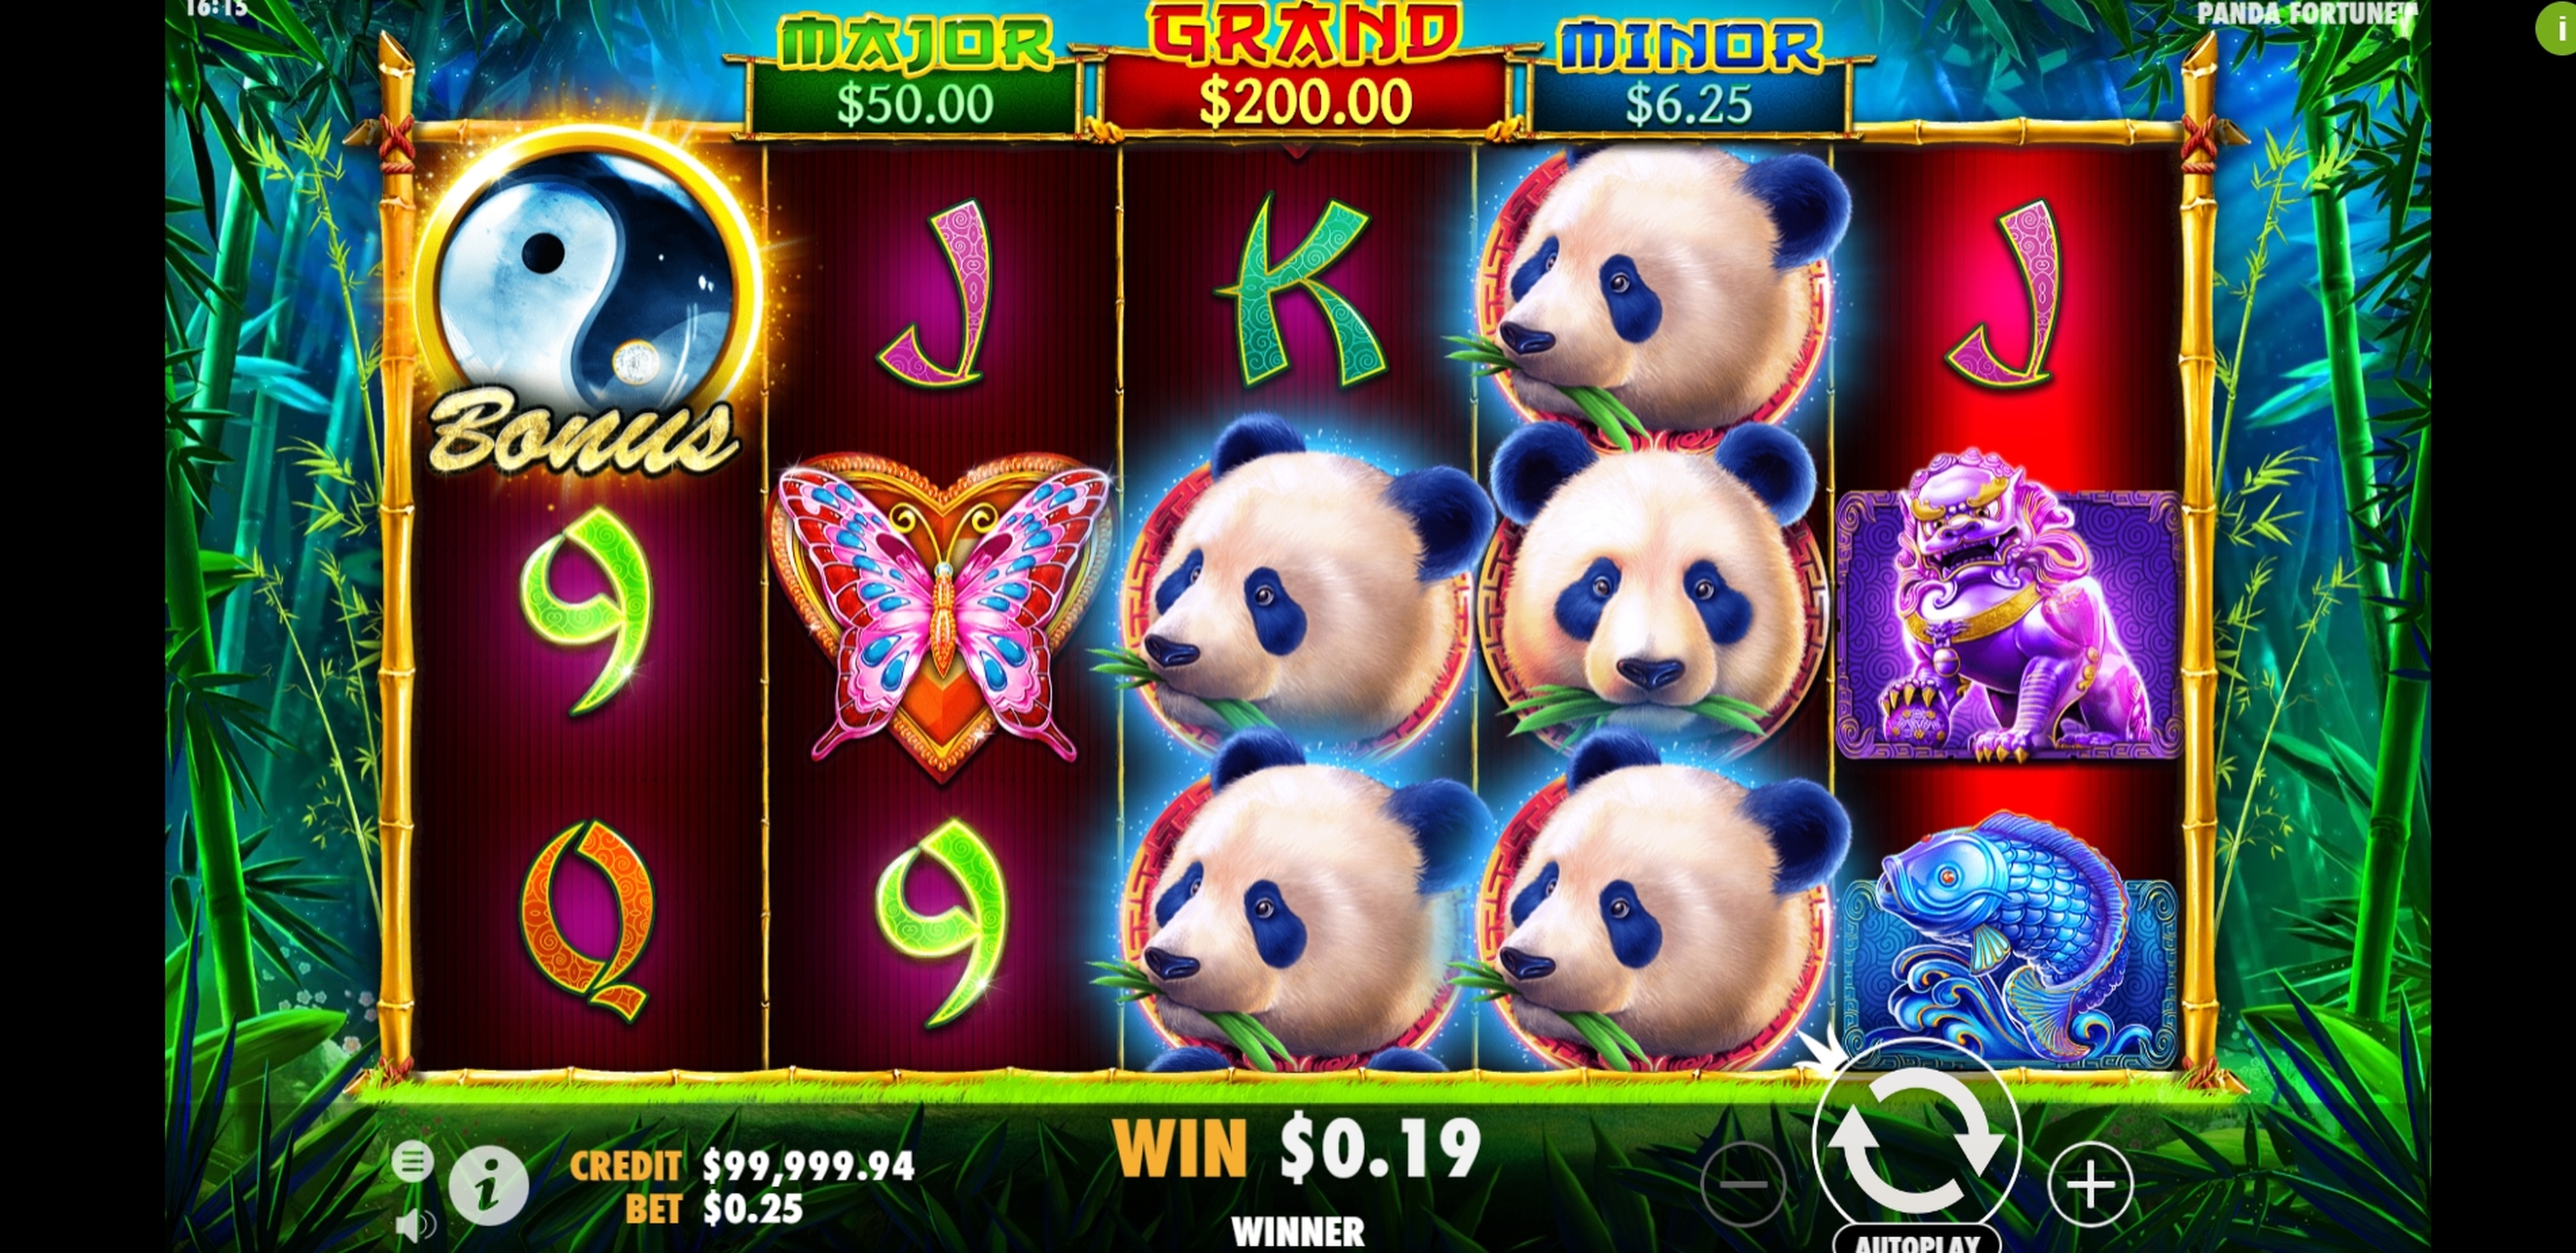 Win Money in Panda's Fortune Free Slot Game by Pragmatic Play